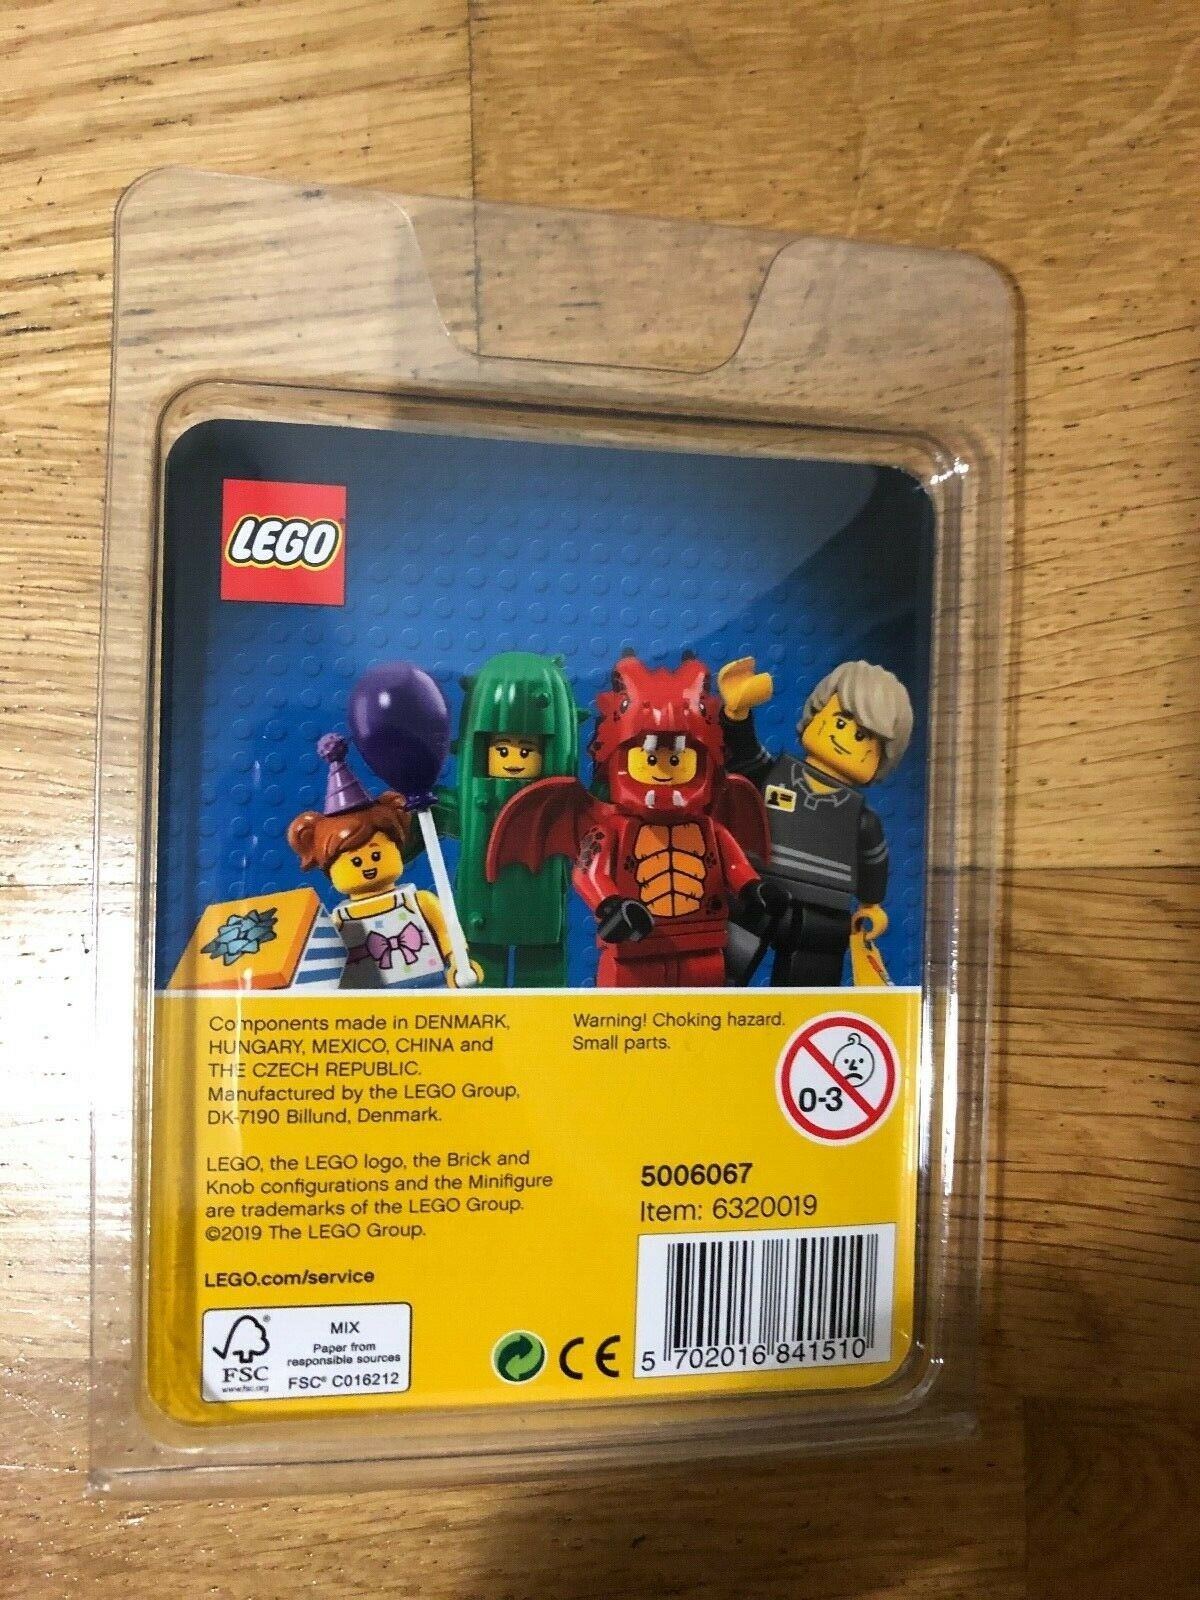 LEGO Southampton UK Store Grand Opening Minifigure - Minifigure Price Guide